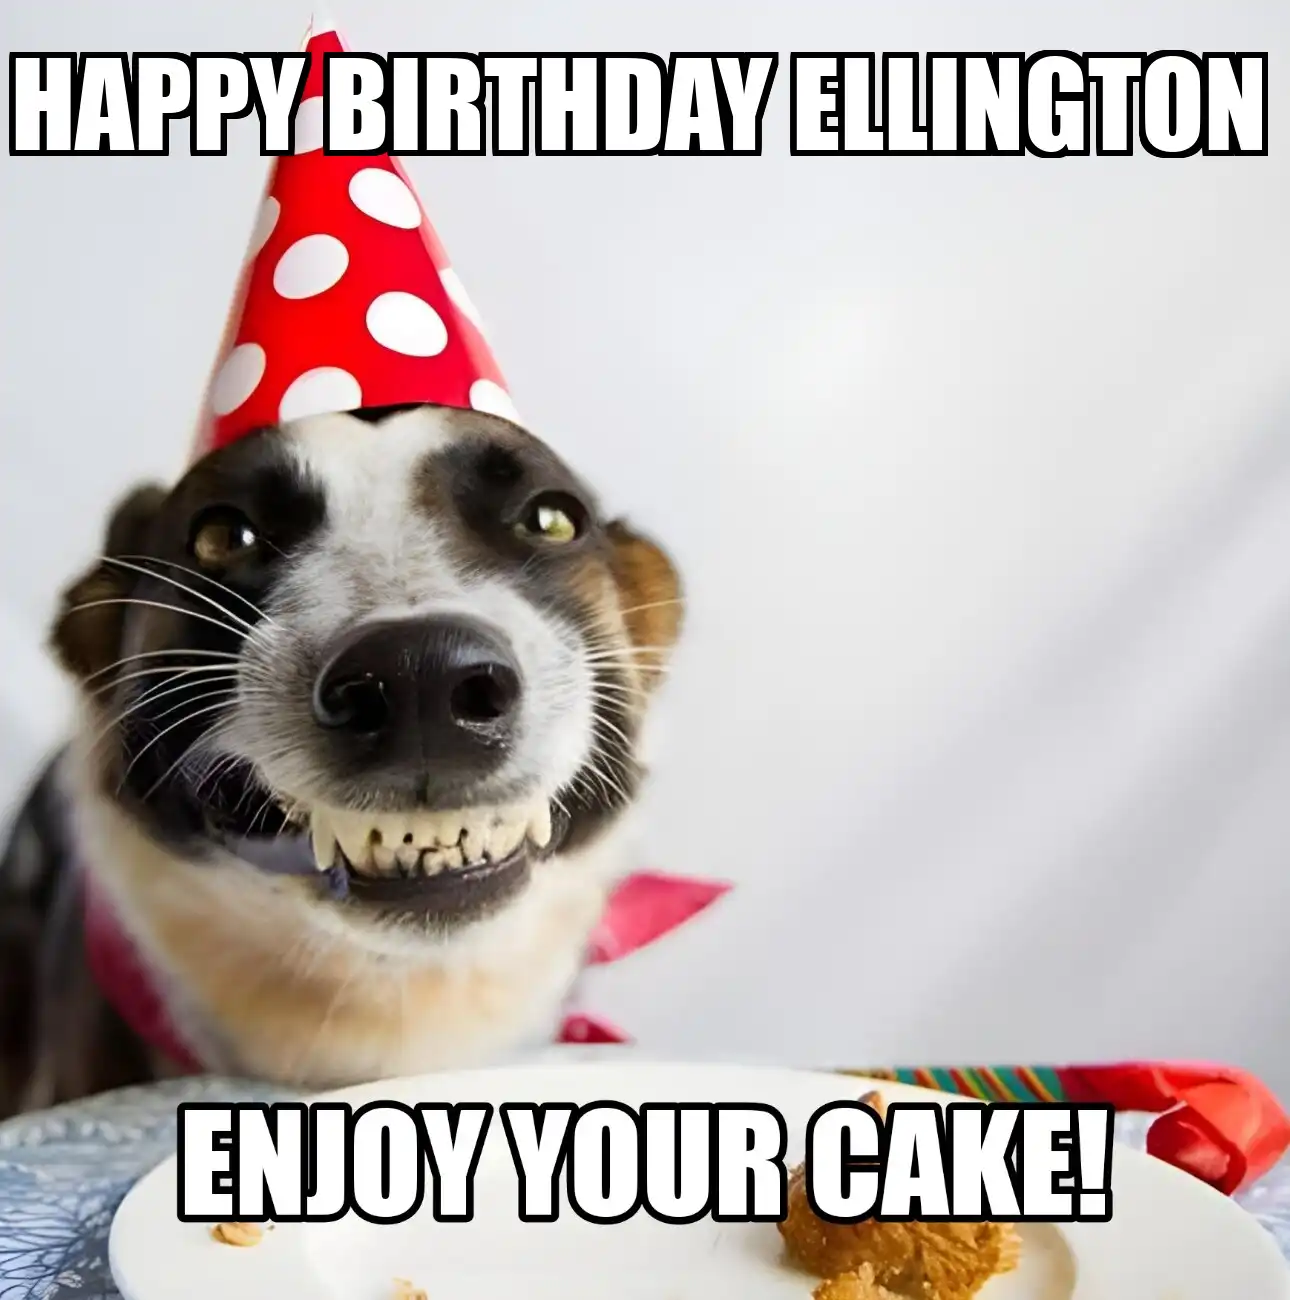 Happy Birthday Ellington Enjoy Your Cake Dog Meme